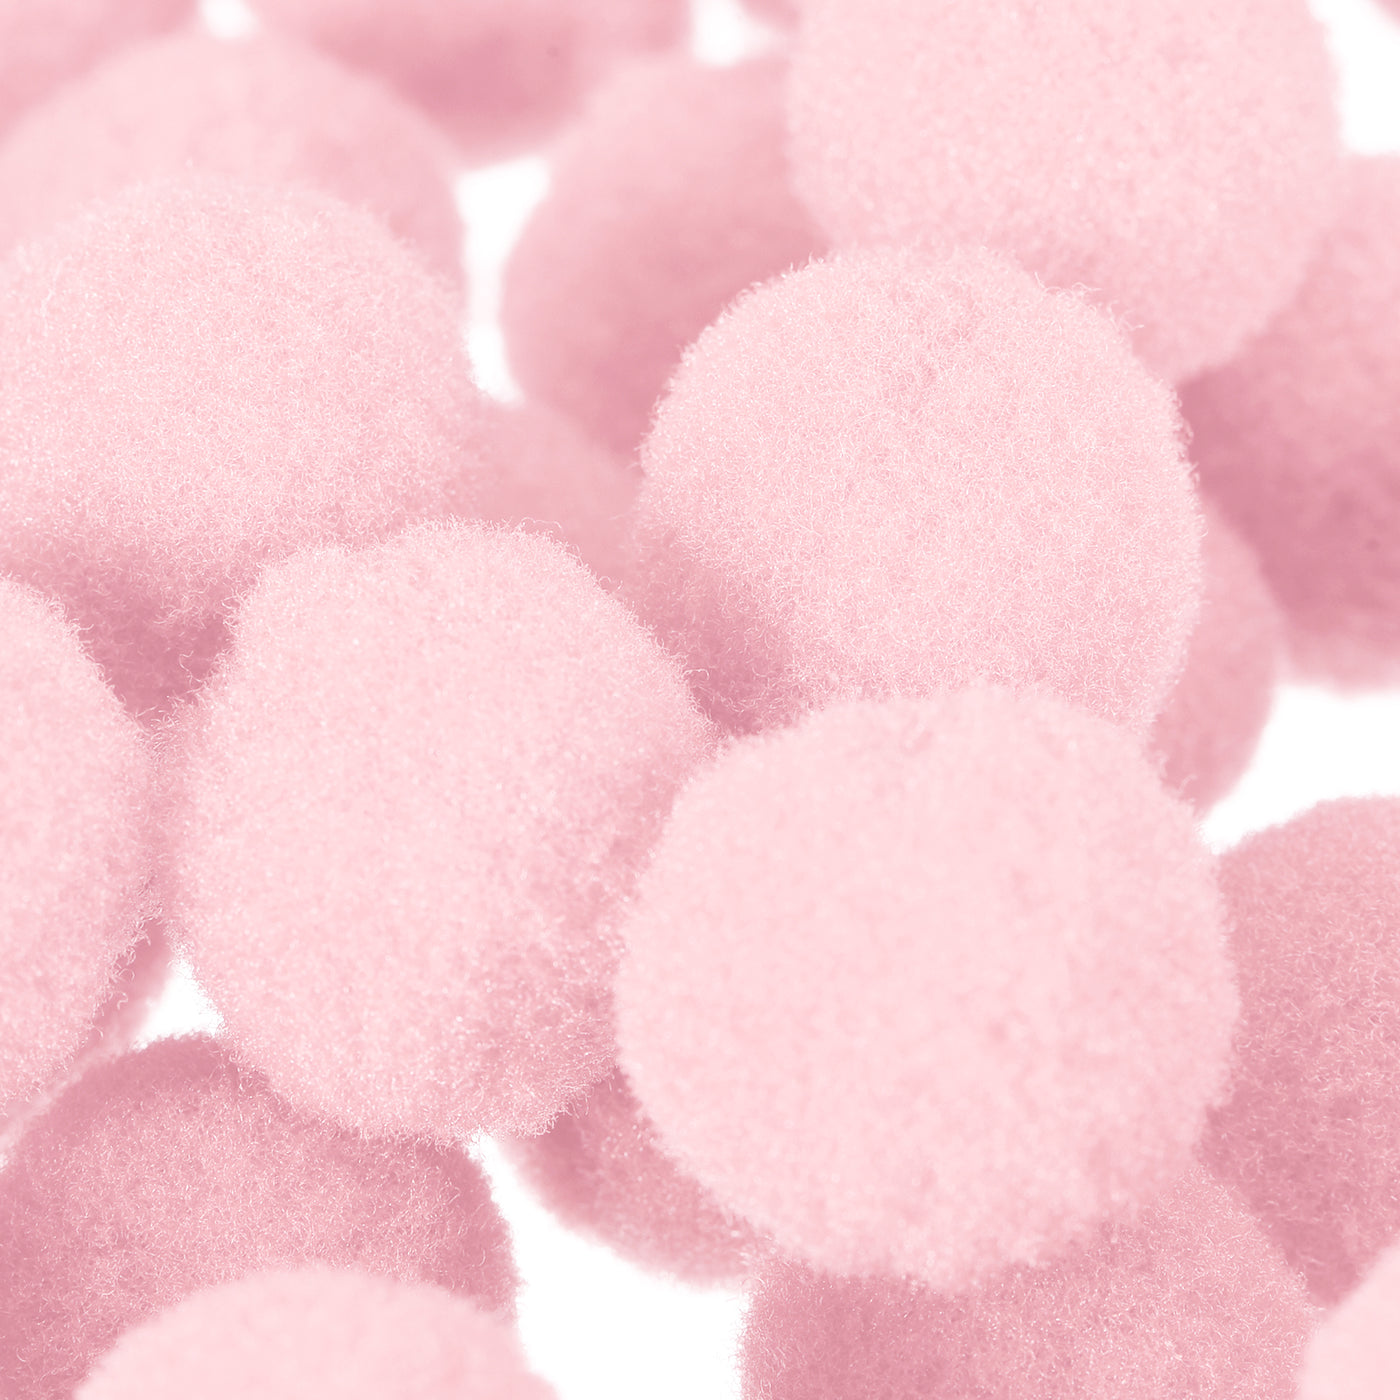 Harfington Pom Felt Balls Fabric 1.5cm 15mm Light Pink for Craft Project DIY 300 Pcs